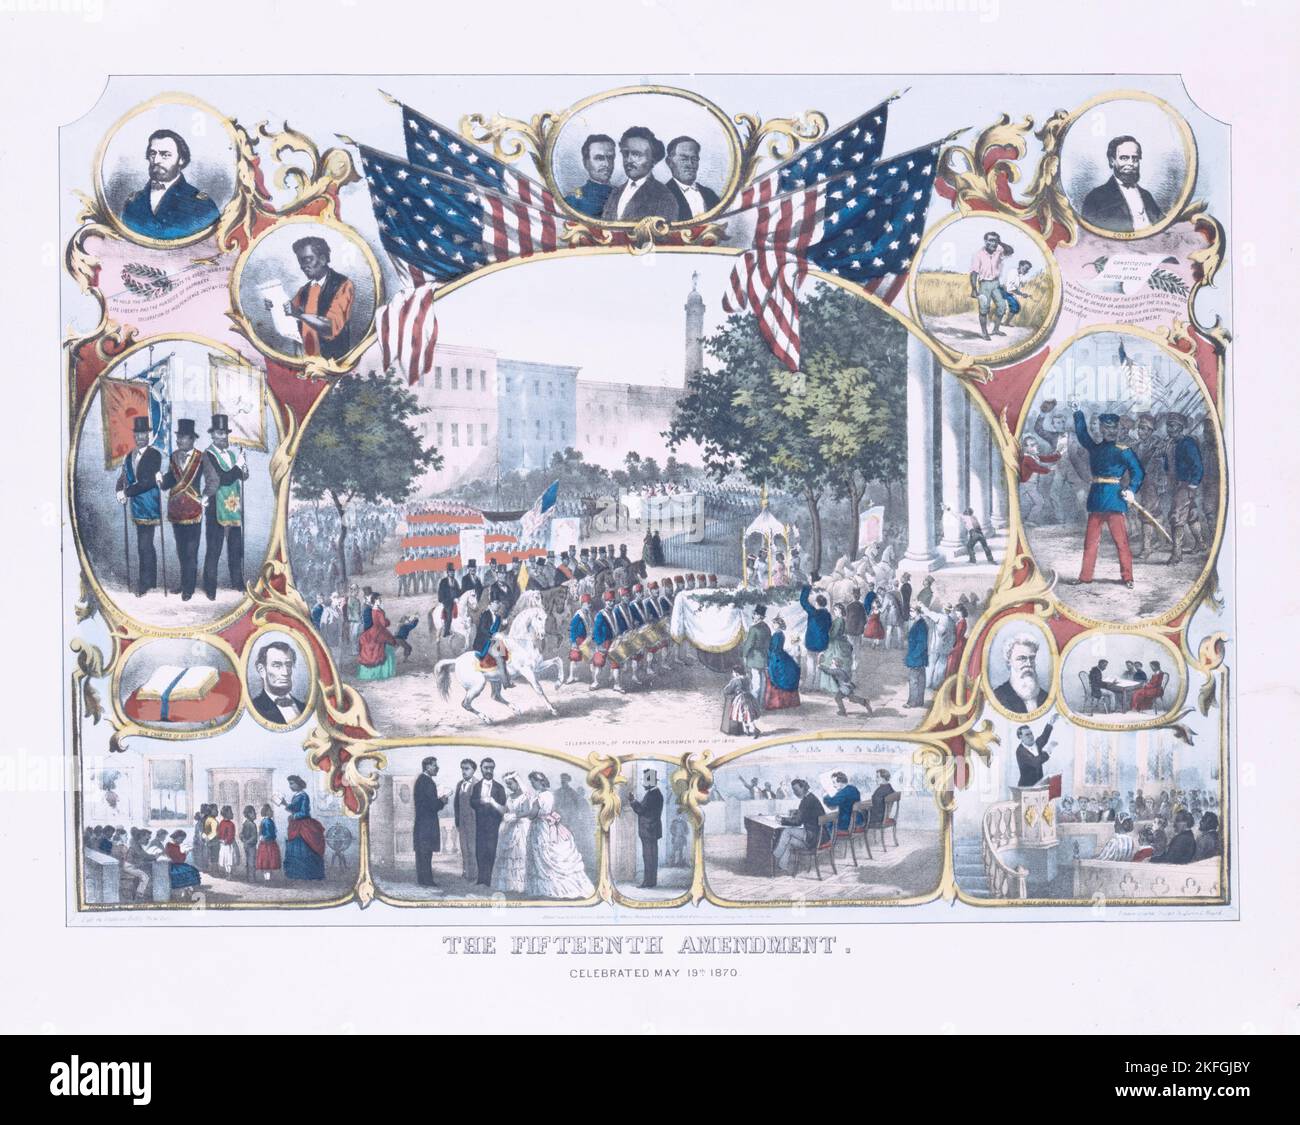 The fifteenth amendment: celebrated May 19th, 1870, ca.1870 - 1879. Stock Photo